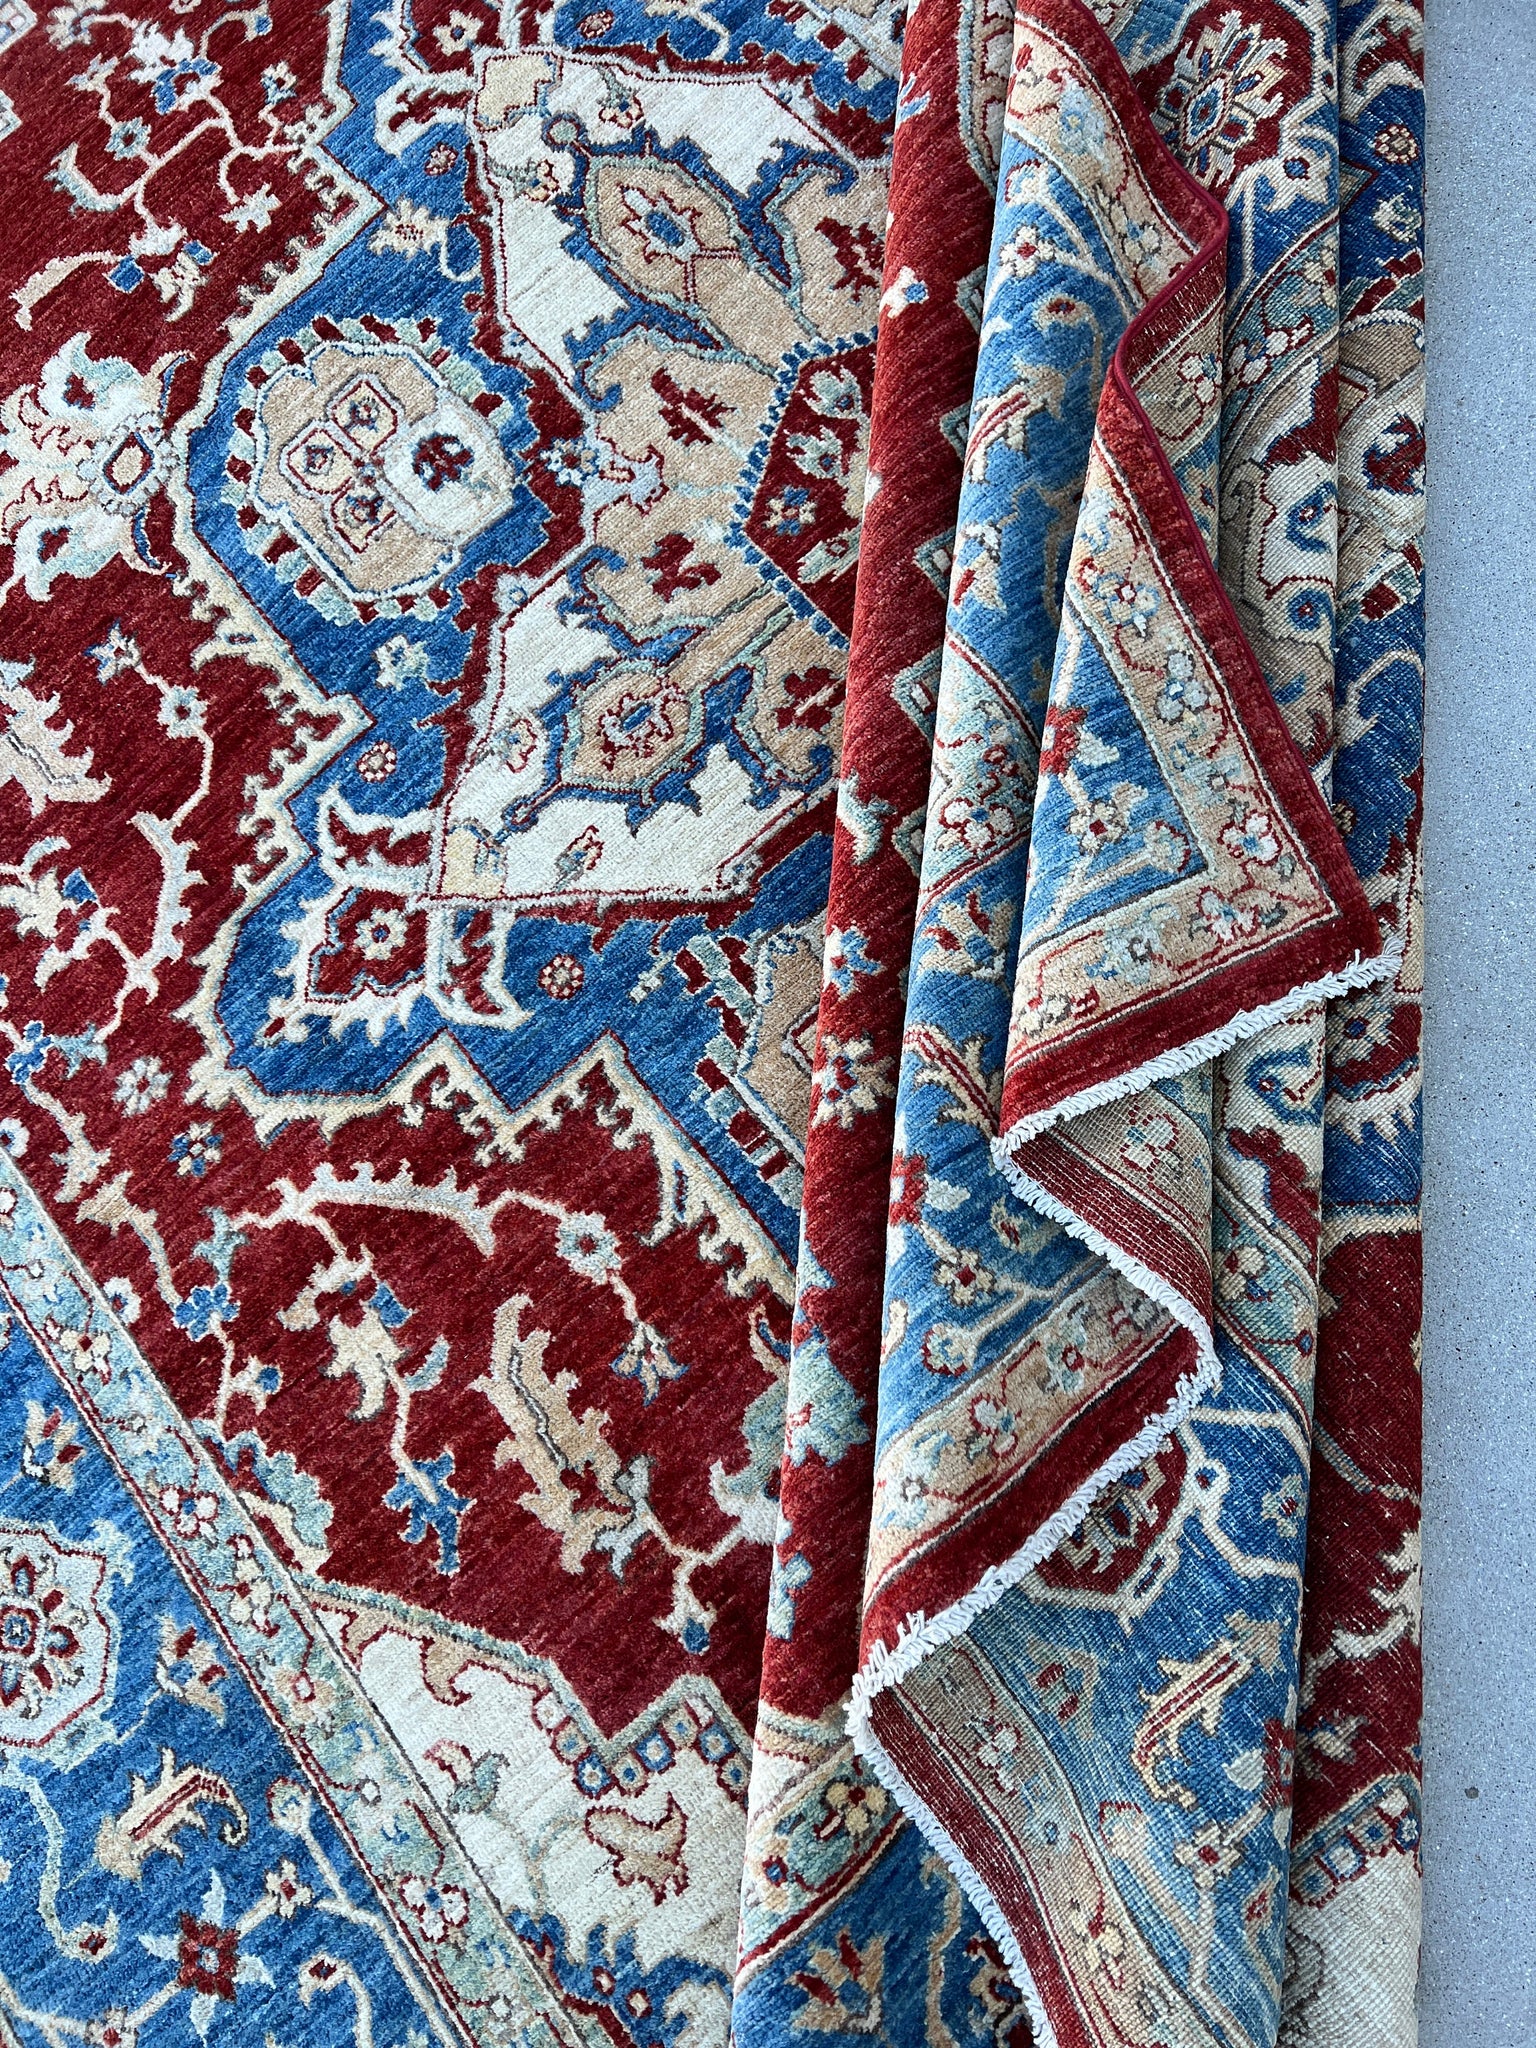 8x11 (245x335) Handmade Afghan Rug | Red Denim Blue Golden Brown White Teal | Hand Knotted Wool Turkish Oushak Persian Heriz Serapi Moroccan